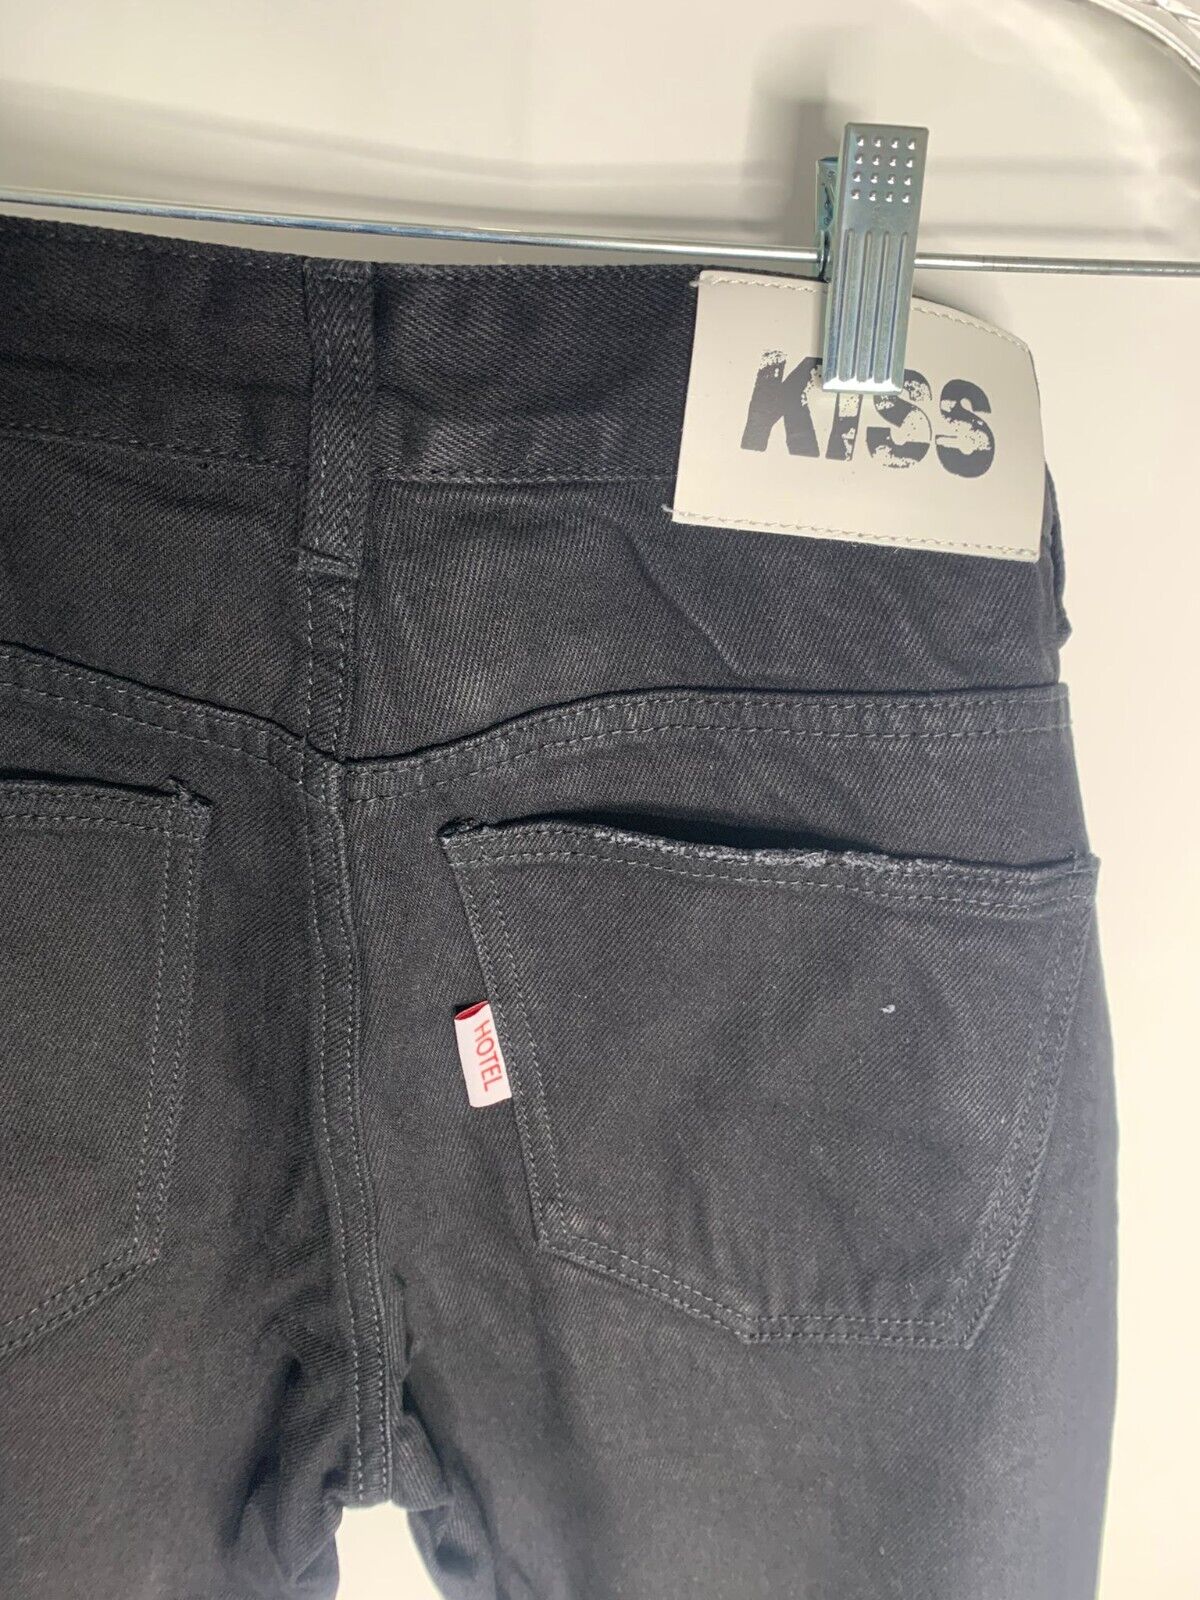 Kiss Hotel Mens 29 Black Denim Skinny Jeans Pants Playboi Carti